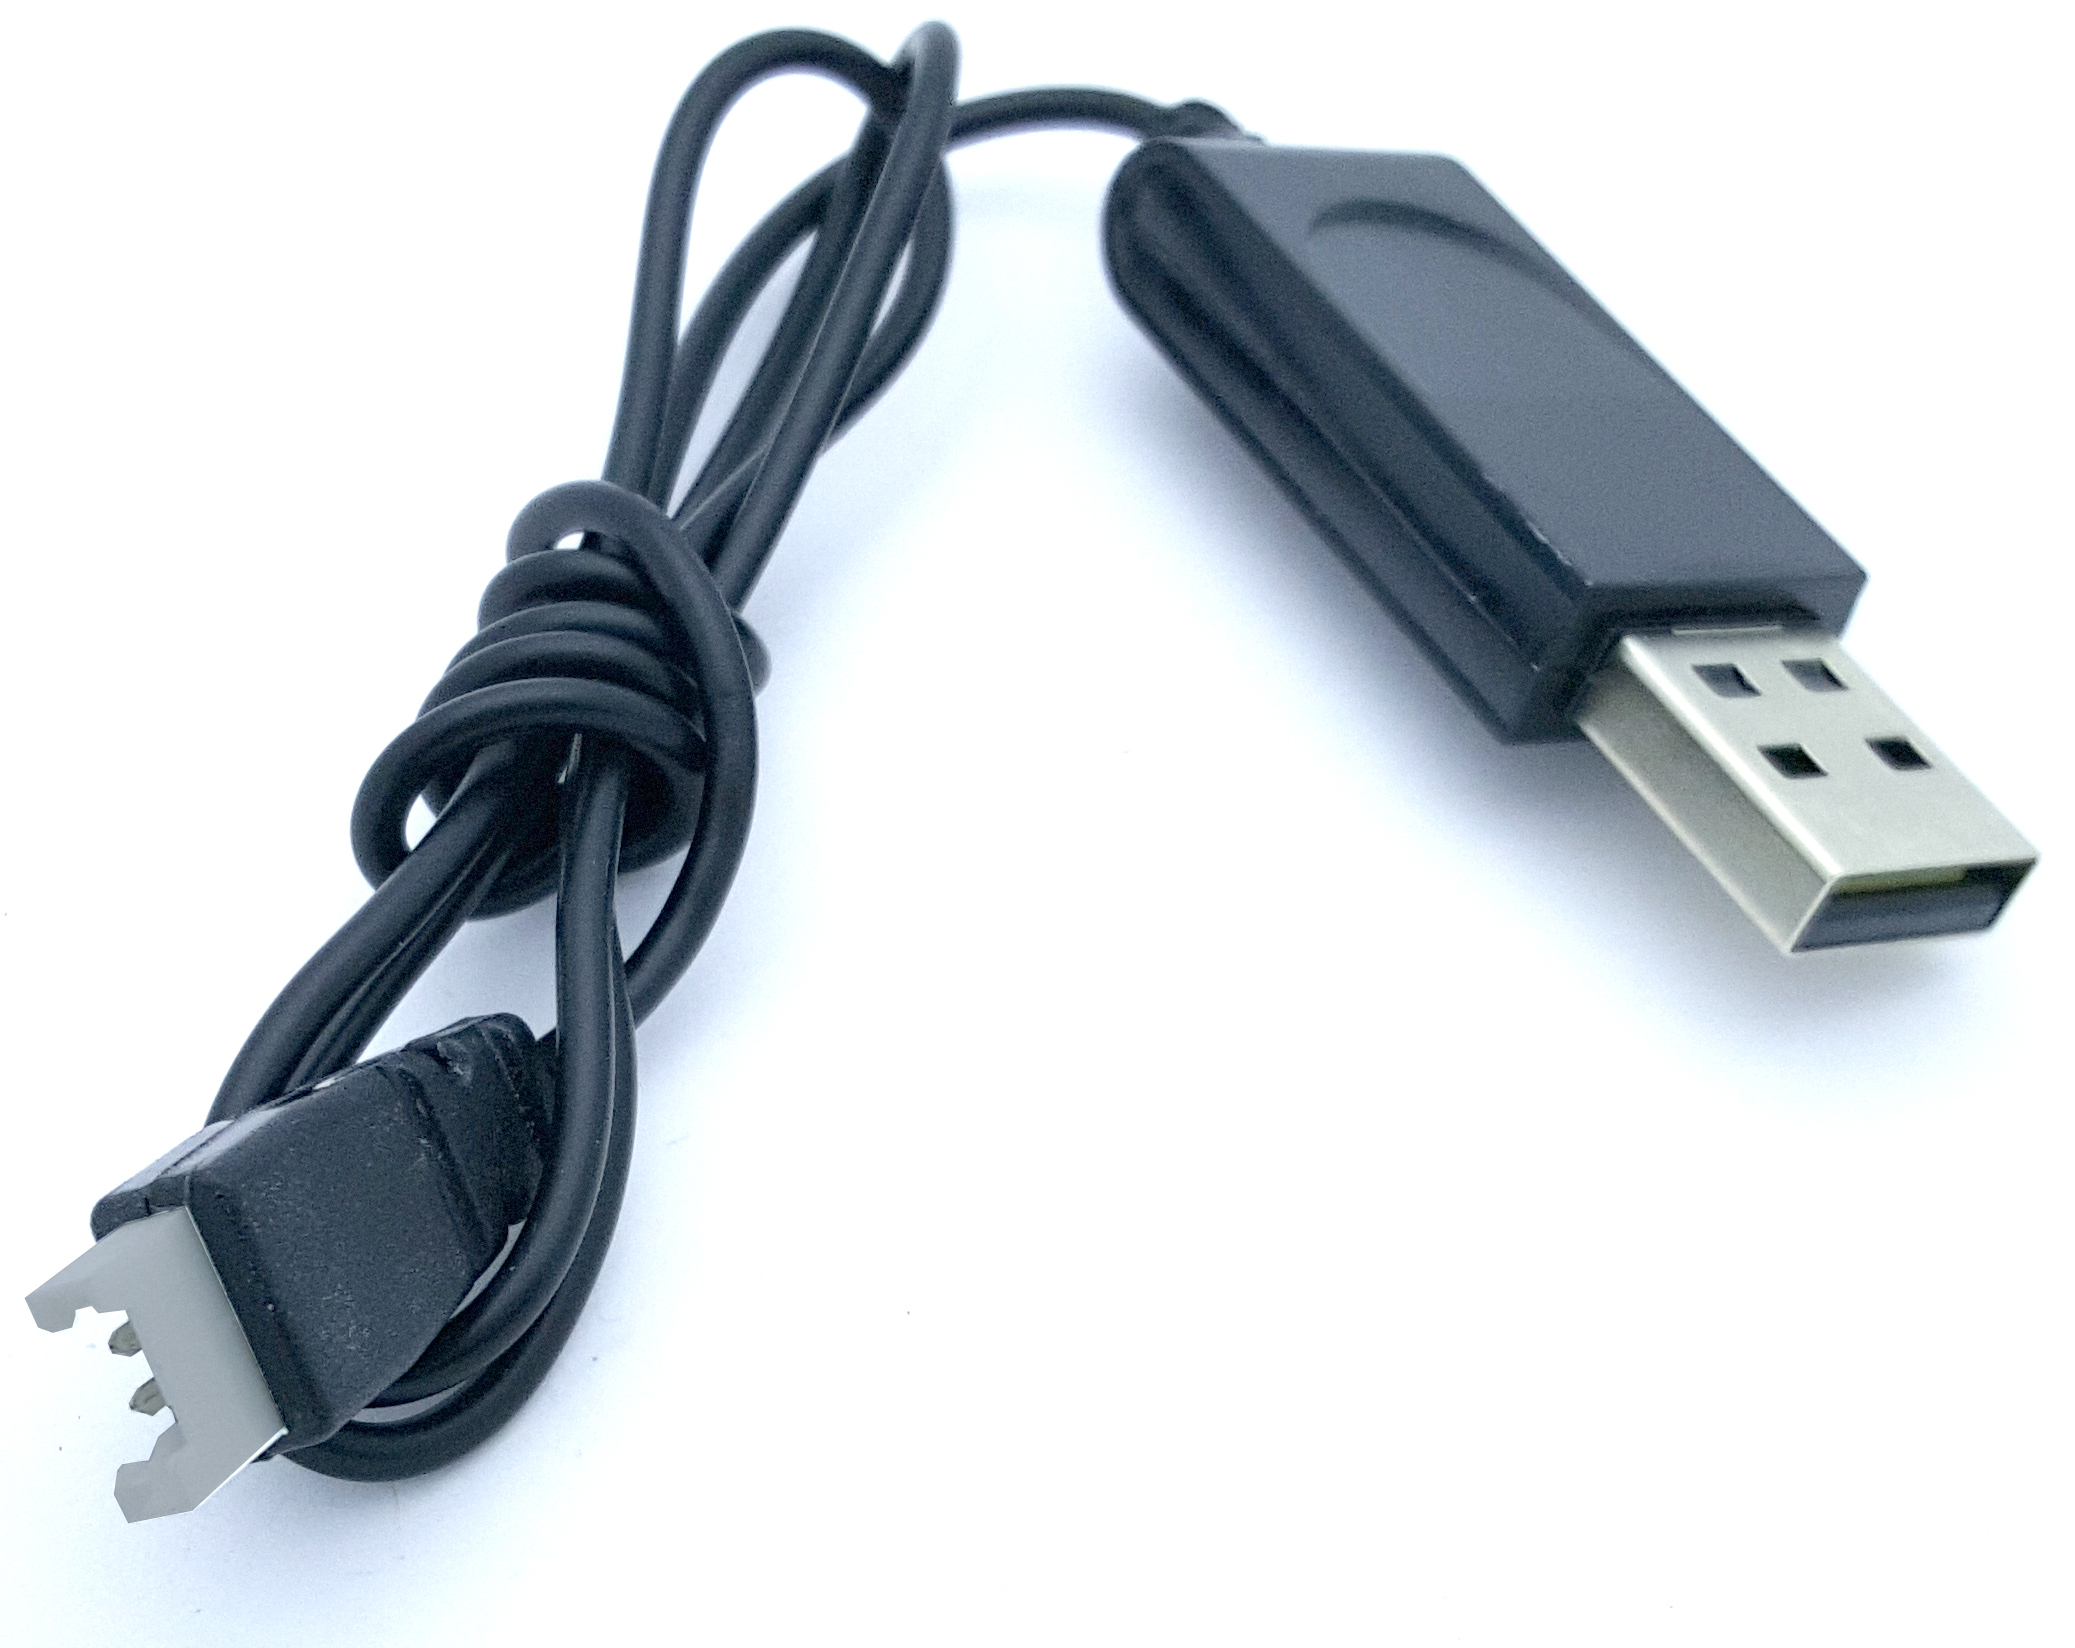 boks tabe binde USB Lipo (Li-Ion) Battery Charger - 3.7V